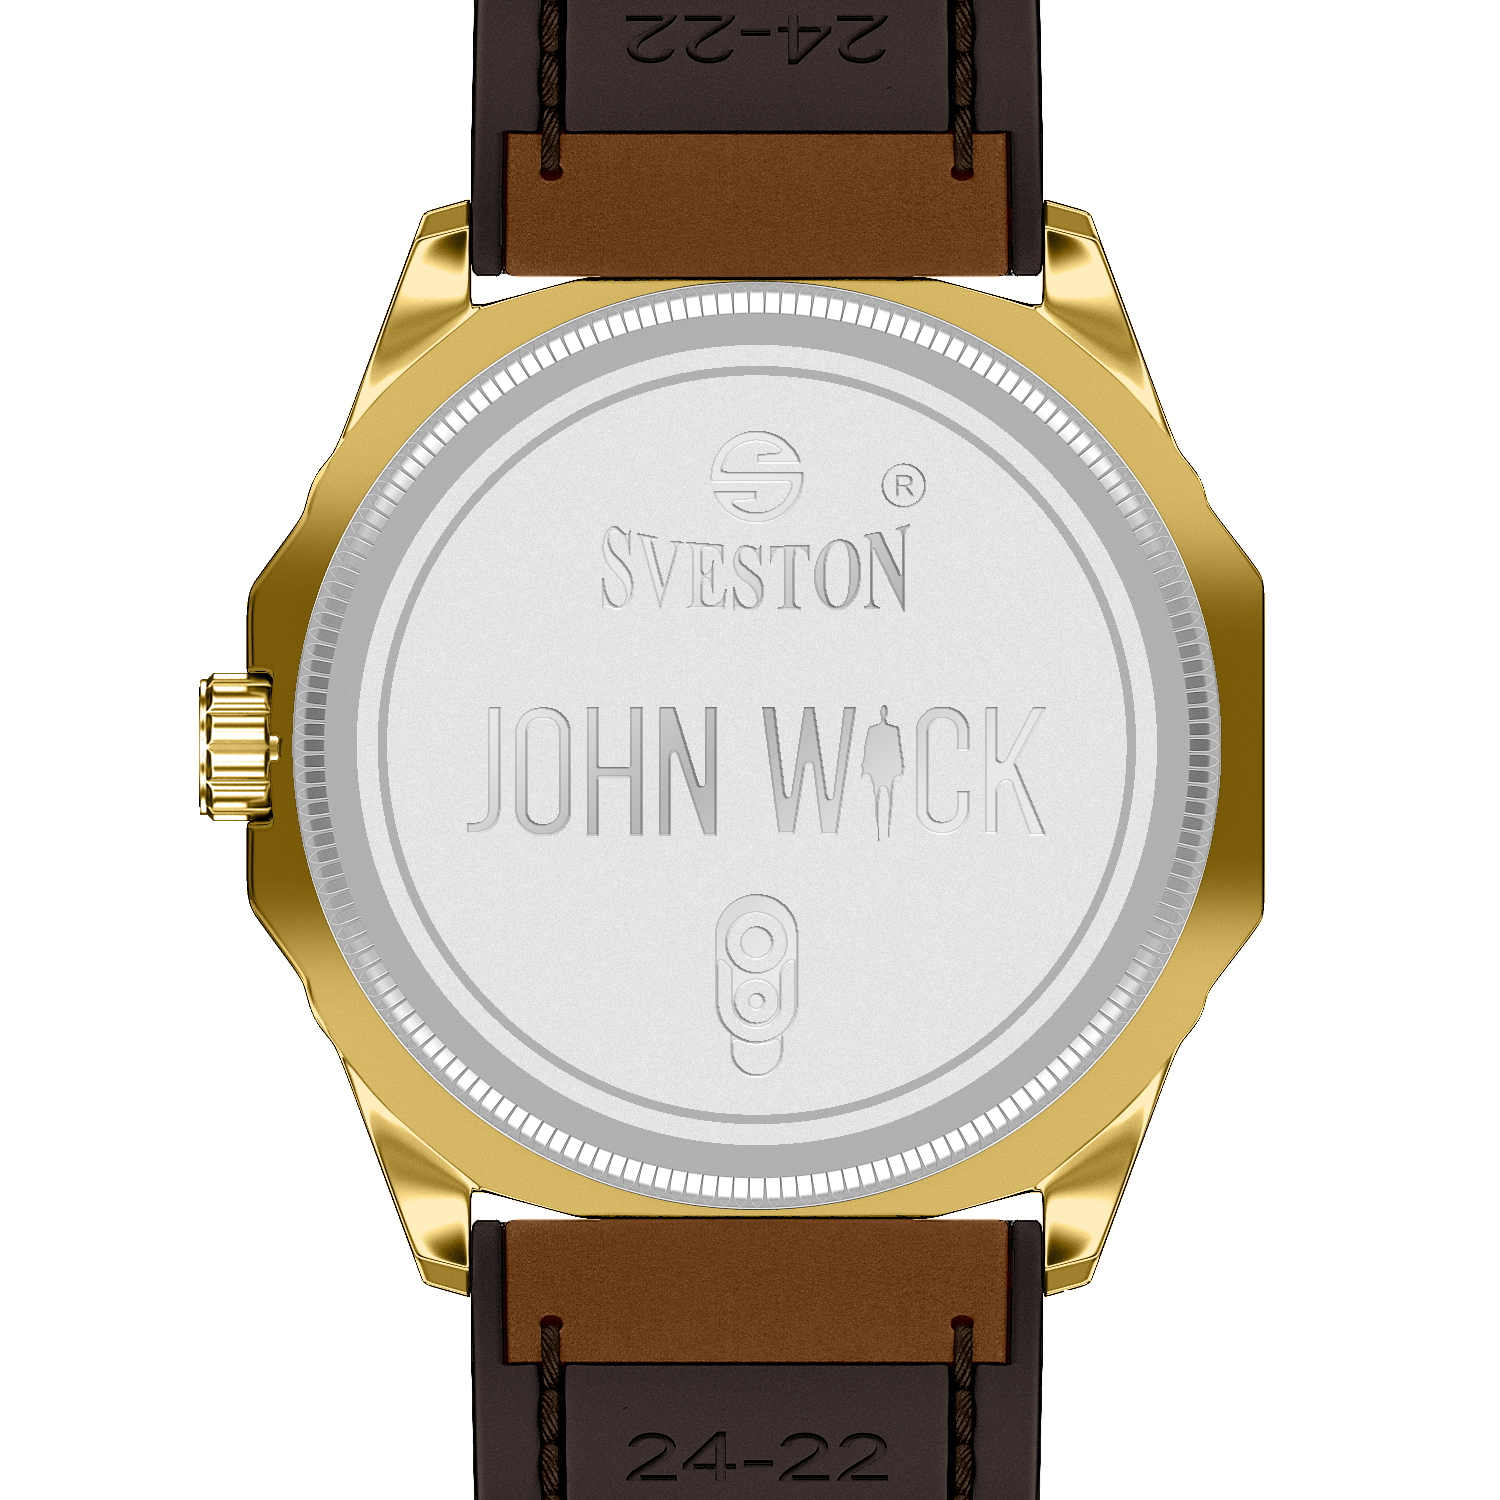 Sveston Johnwick 3.0 SV-7028-M